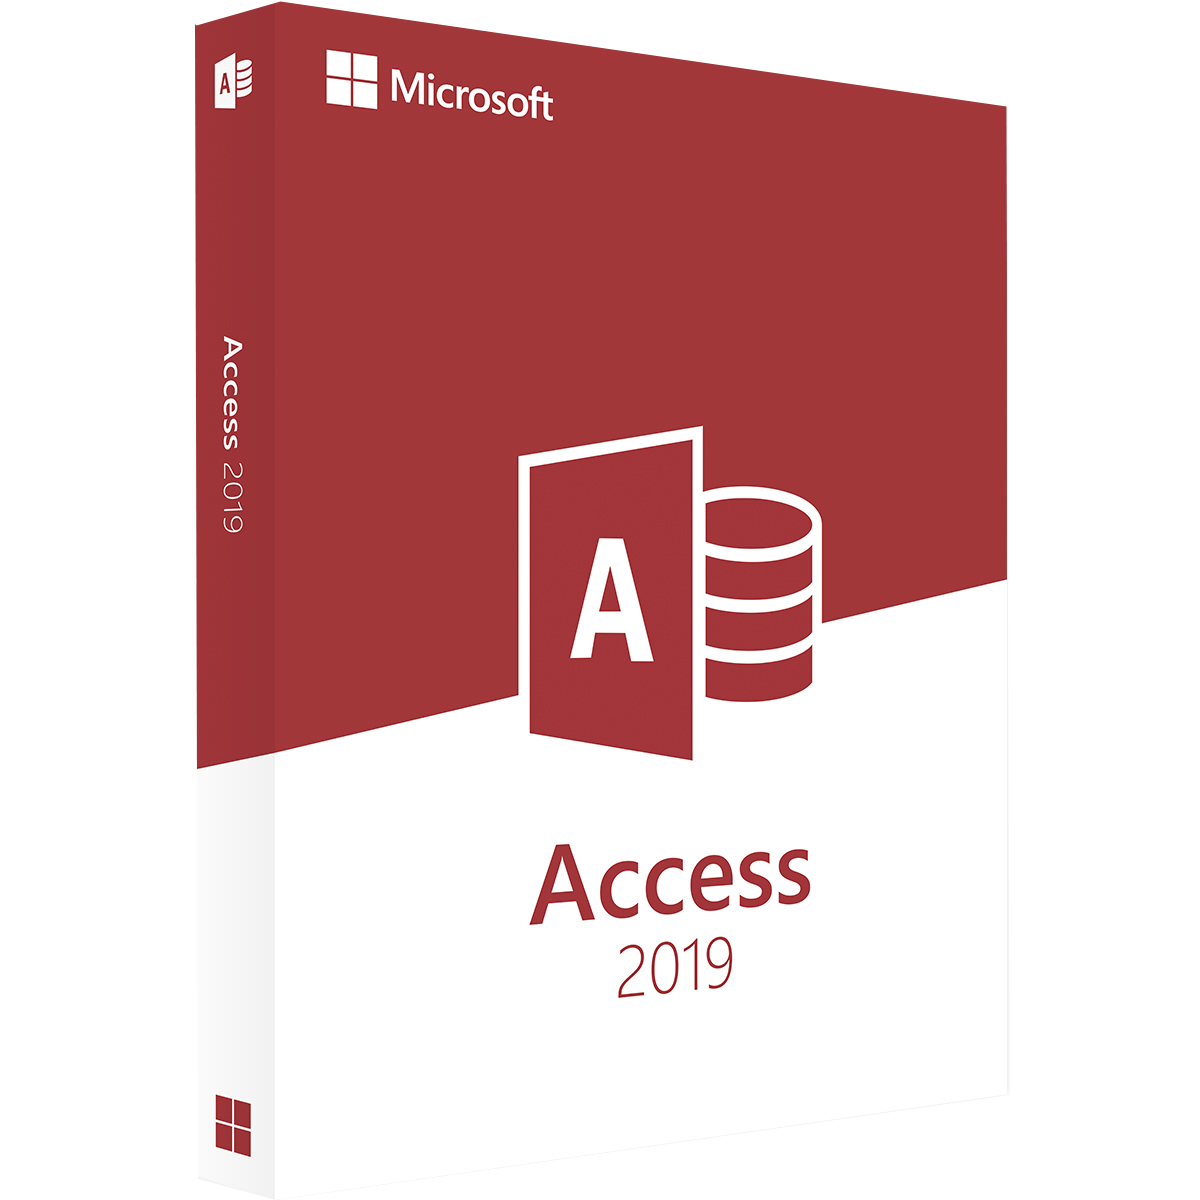 Microsoft Access 19 Pc 2台 ダウンロード版 プロダクトキーを購入 Flox Jp